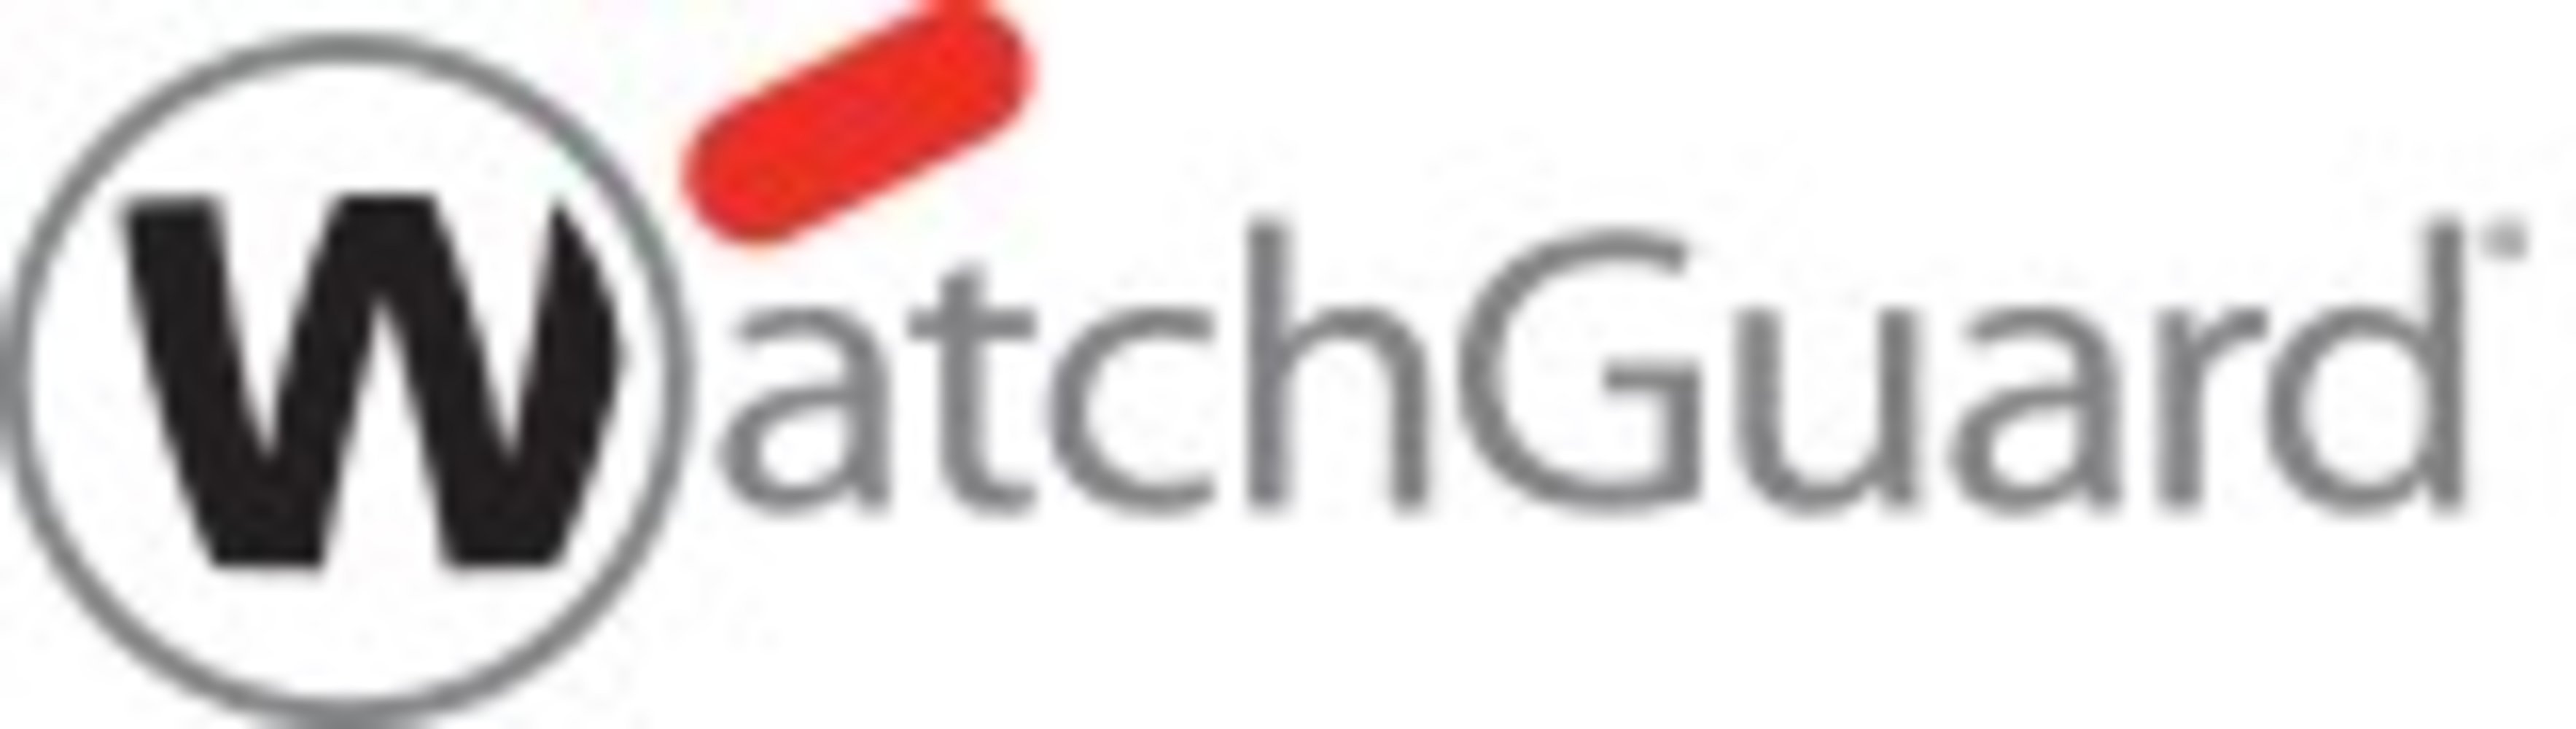 WatchGuard Firebox zbh Datenhaltung WatchGuard Cloud 1 Monat Datenspeicherung für M670 - 1 Jahr